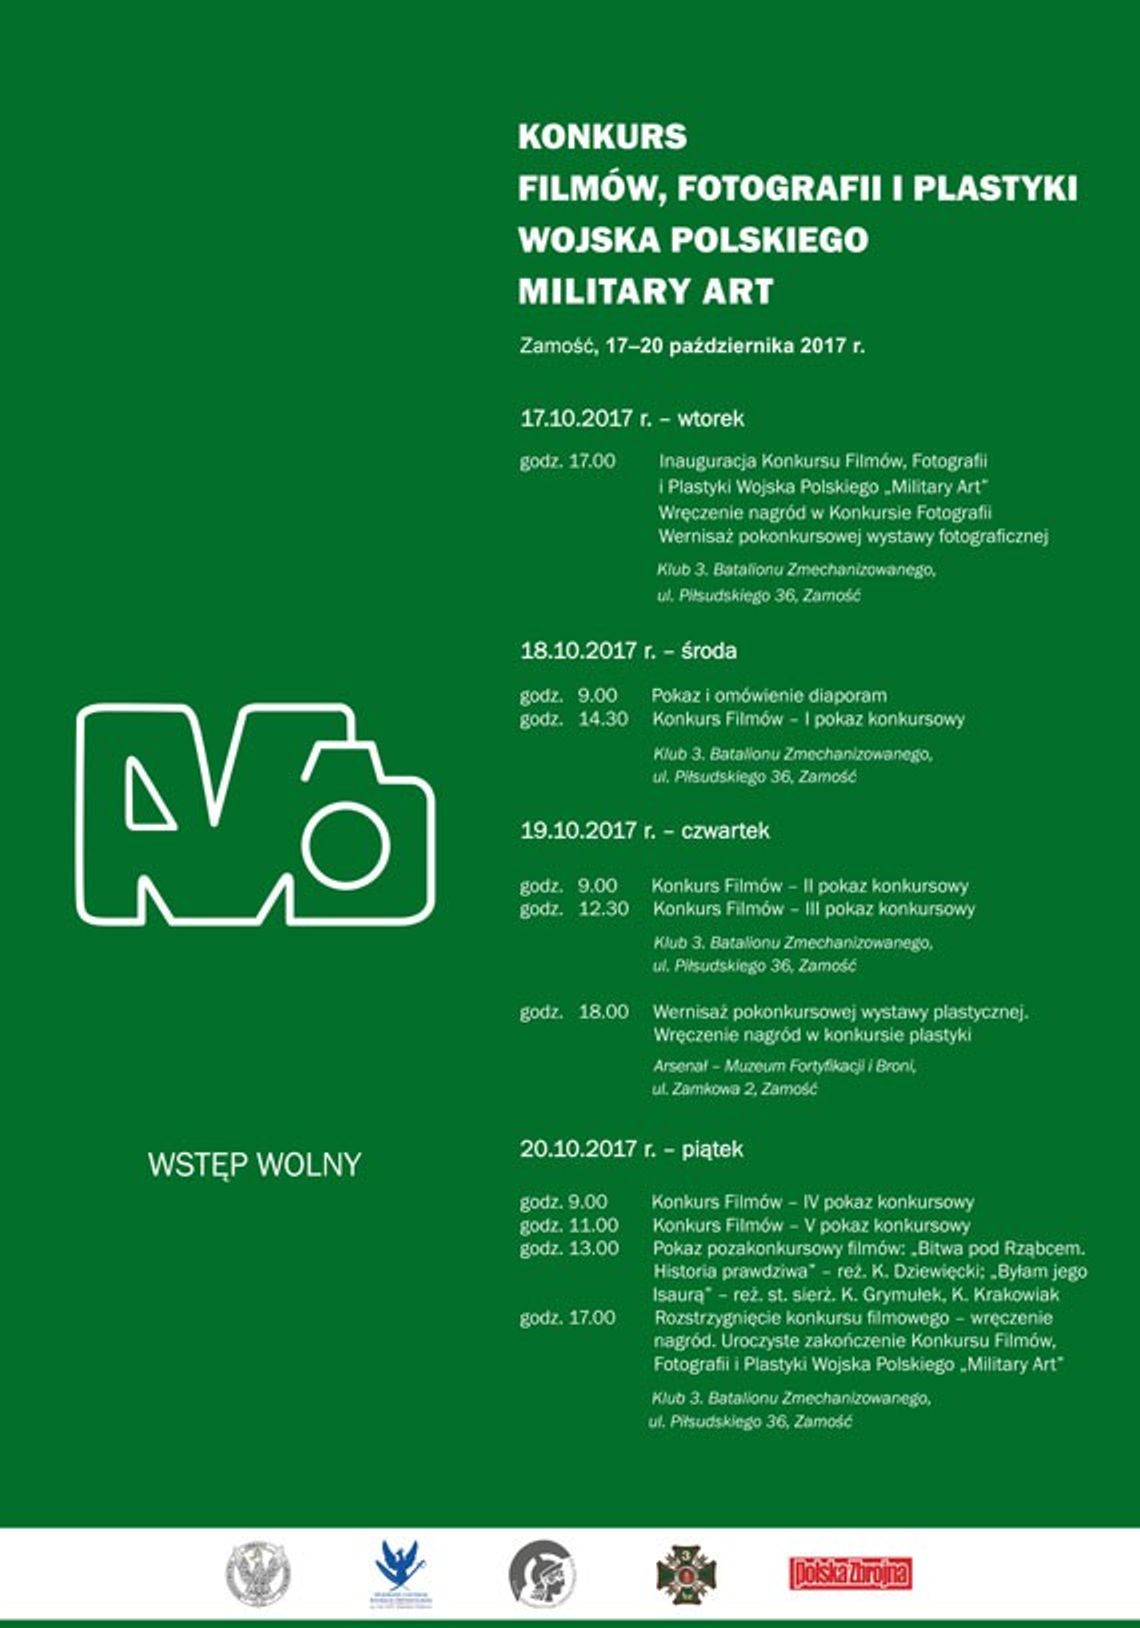 Zamość: Trwa festiwal Military Art